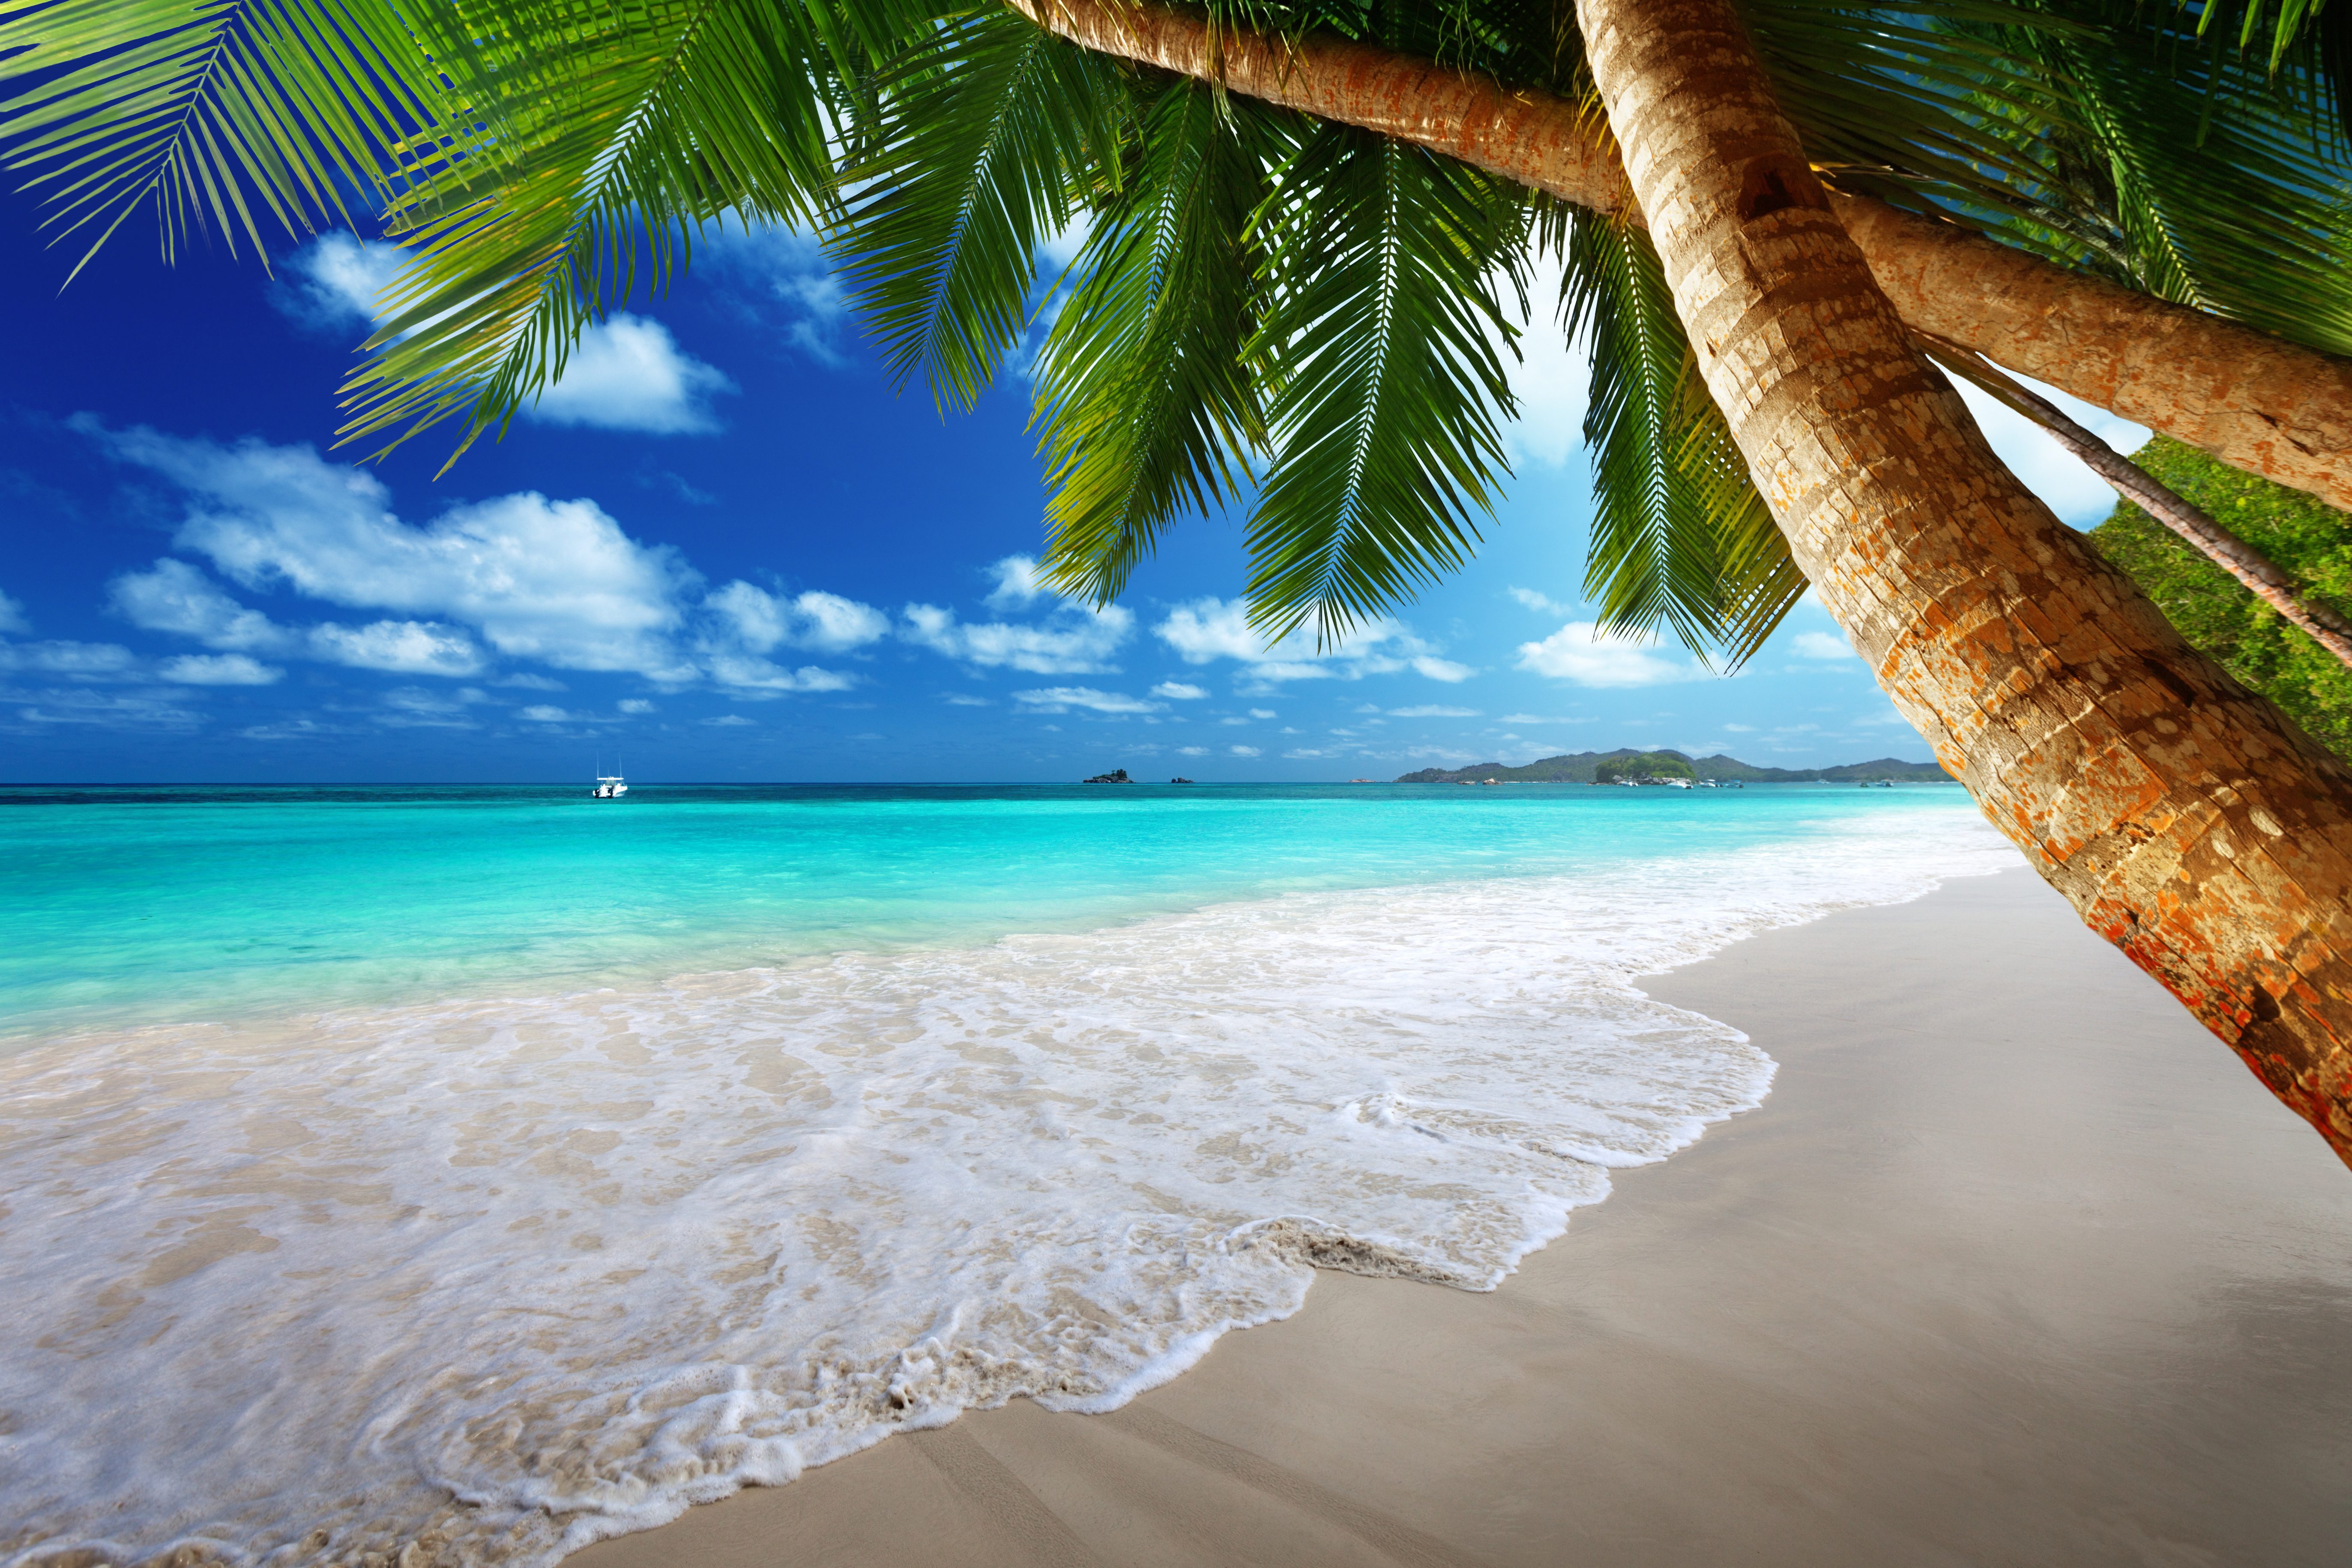 Картинки на обои. Парадиз остров Карибского моря. Карибское море пляж Баунти. Море пляж. Райский пляж.